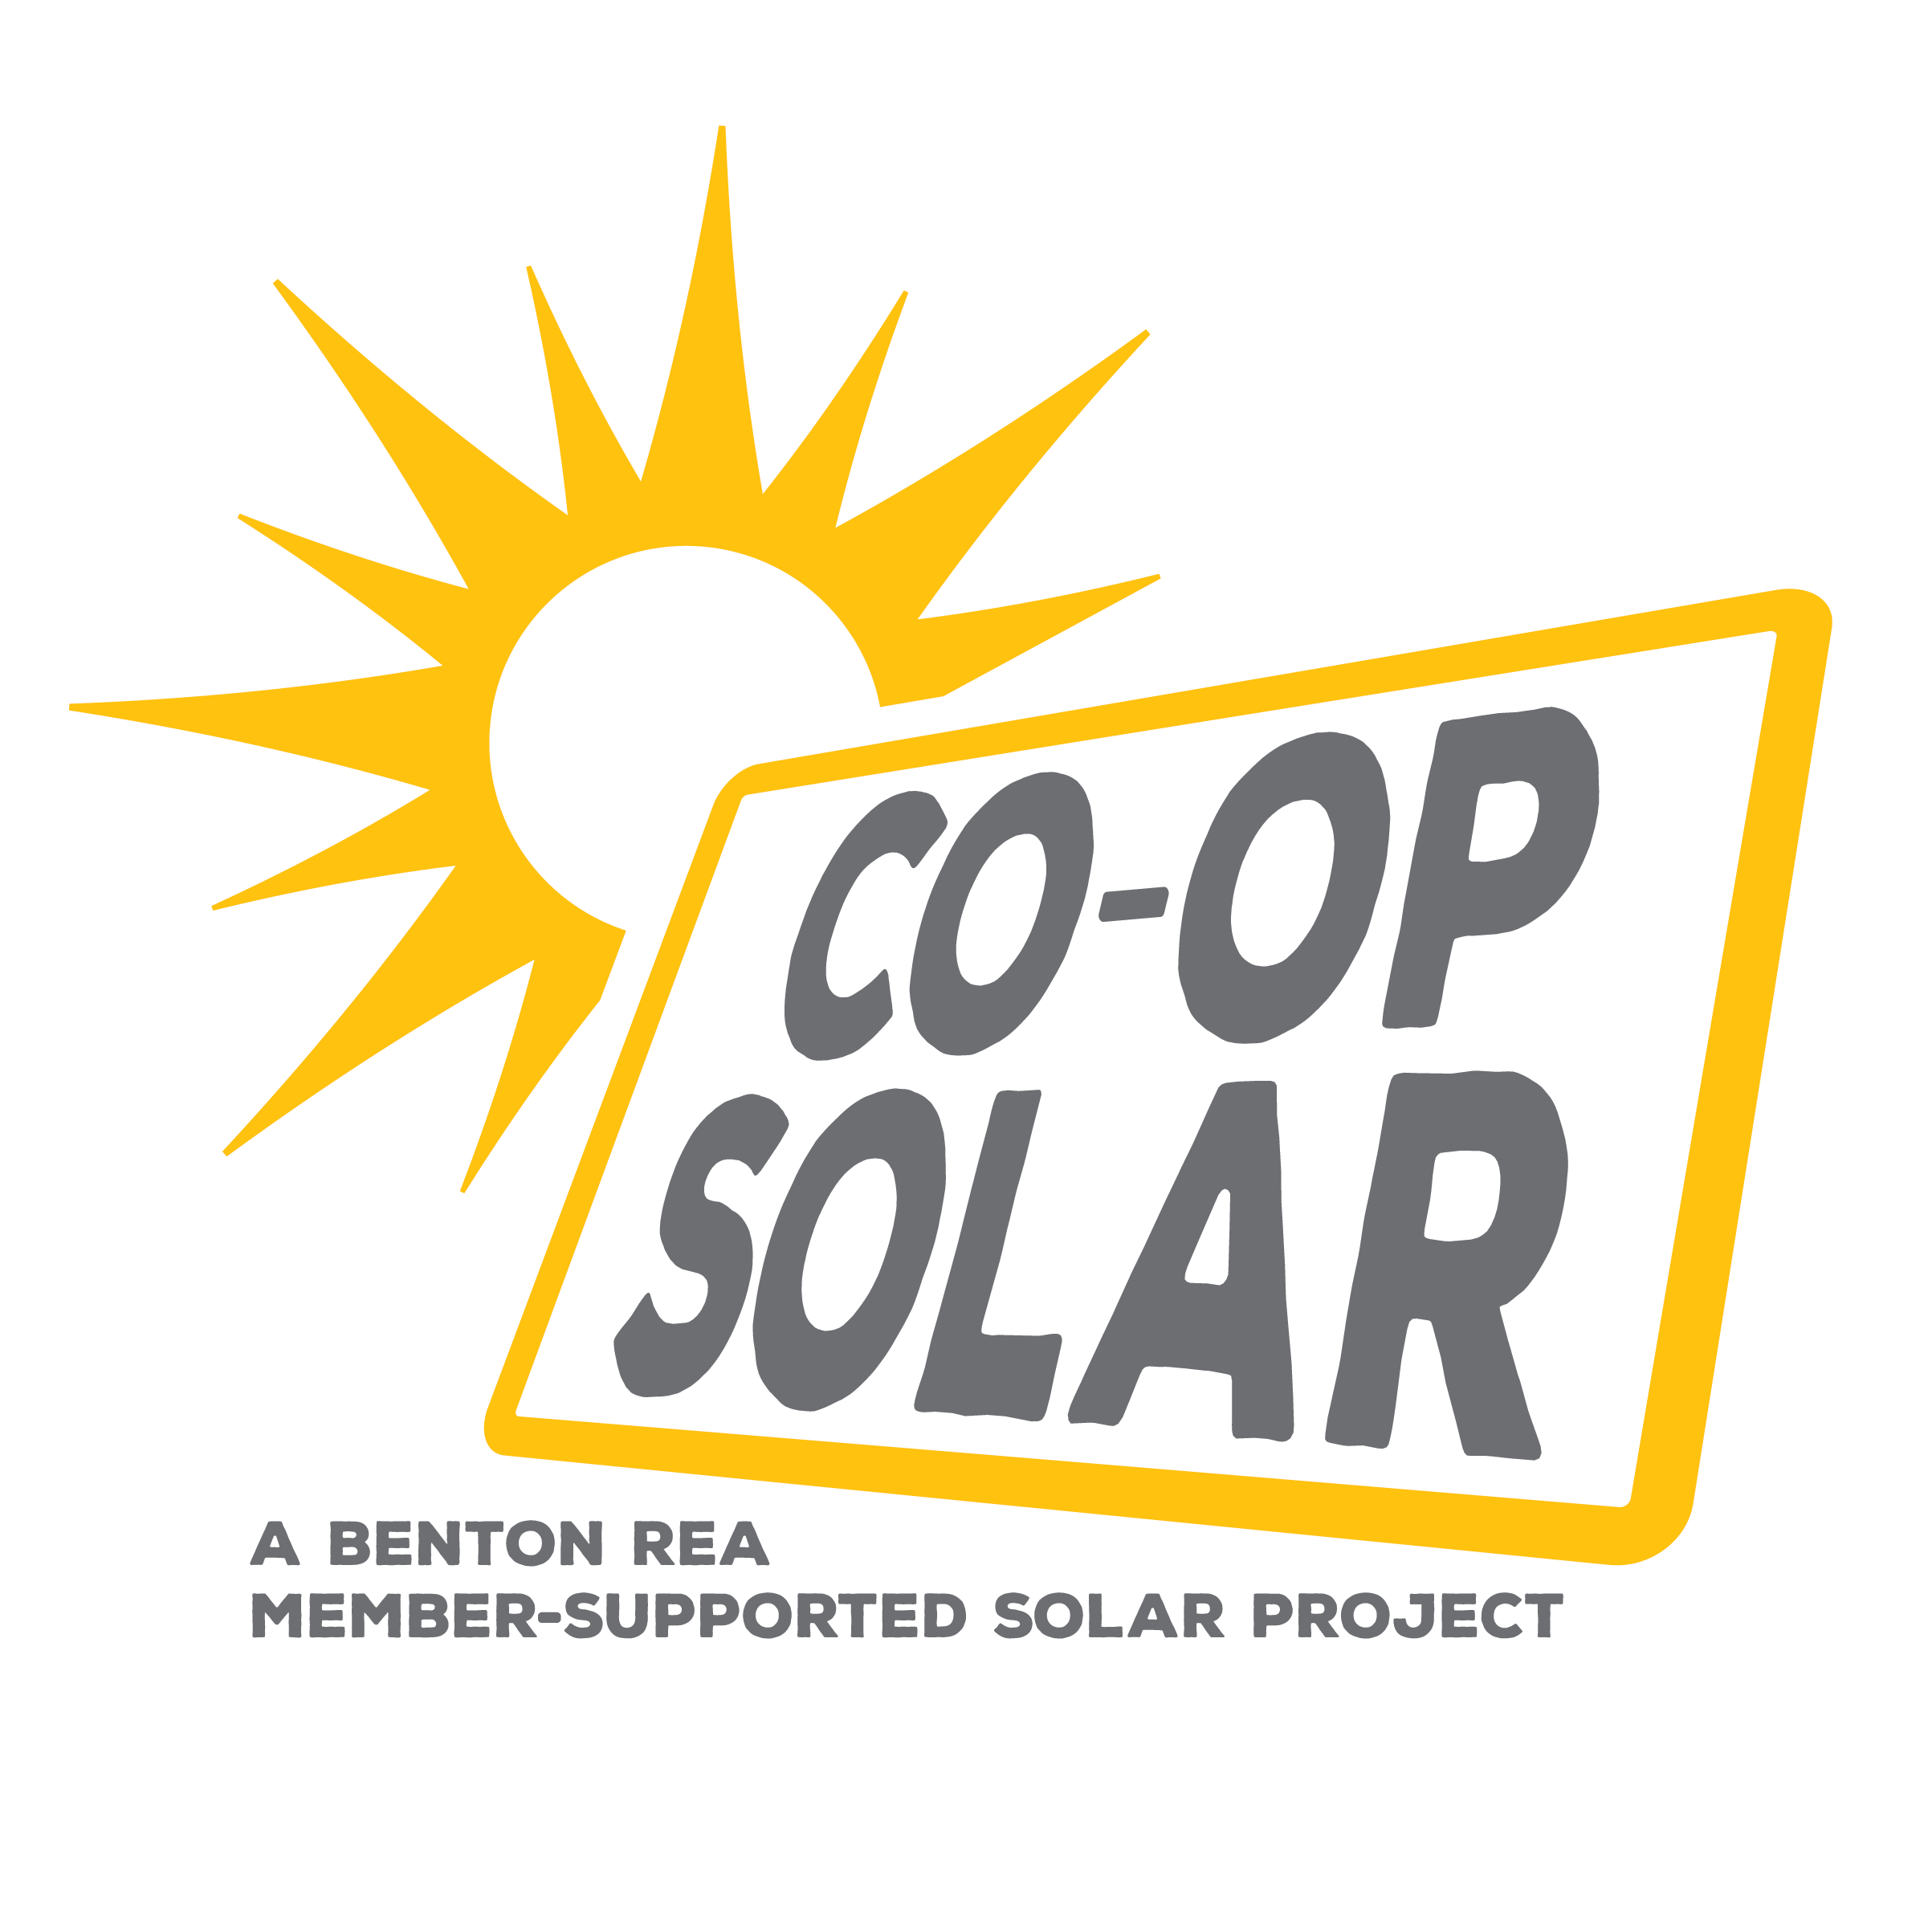 Co-op Solar Logo - A Benton REA Member-Supported Solar Project